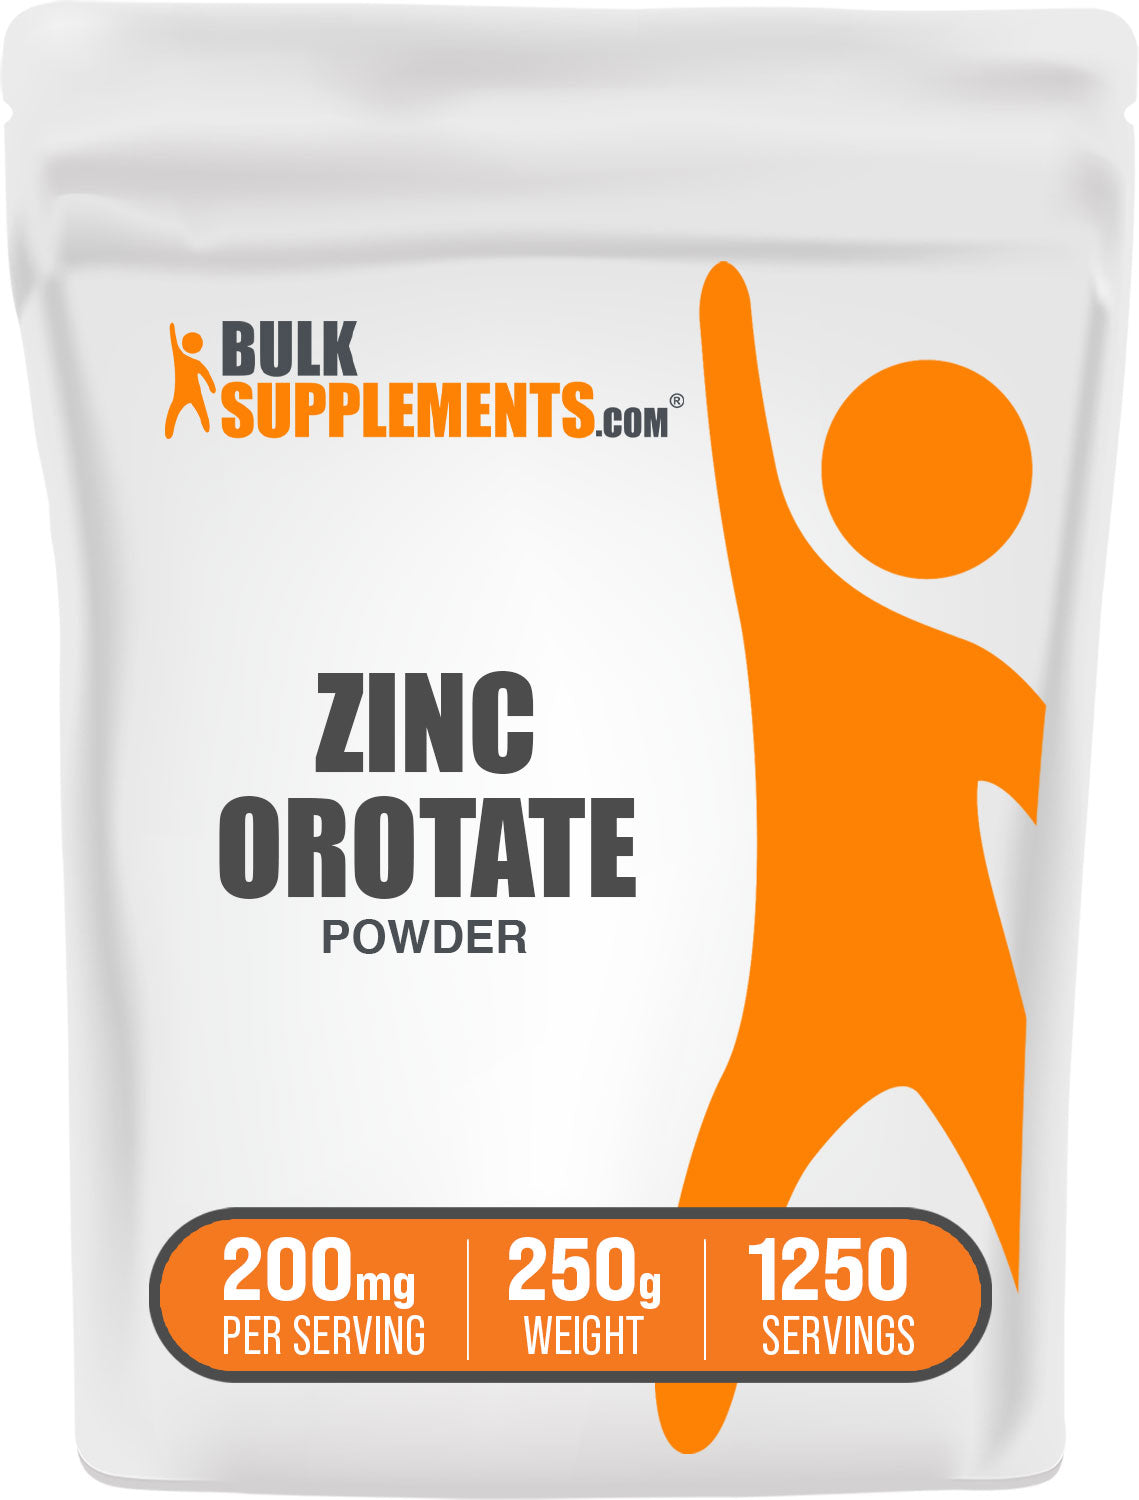 BulkSupplements.com Zinc Orotate Powder 250g bag